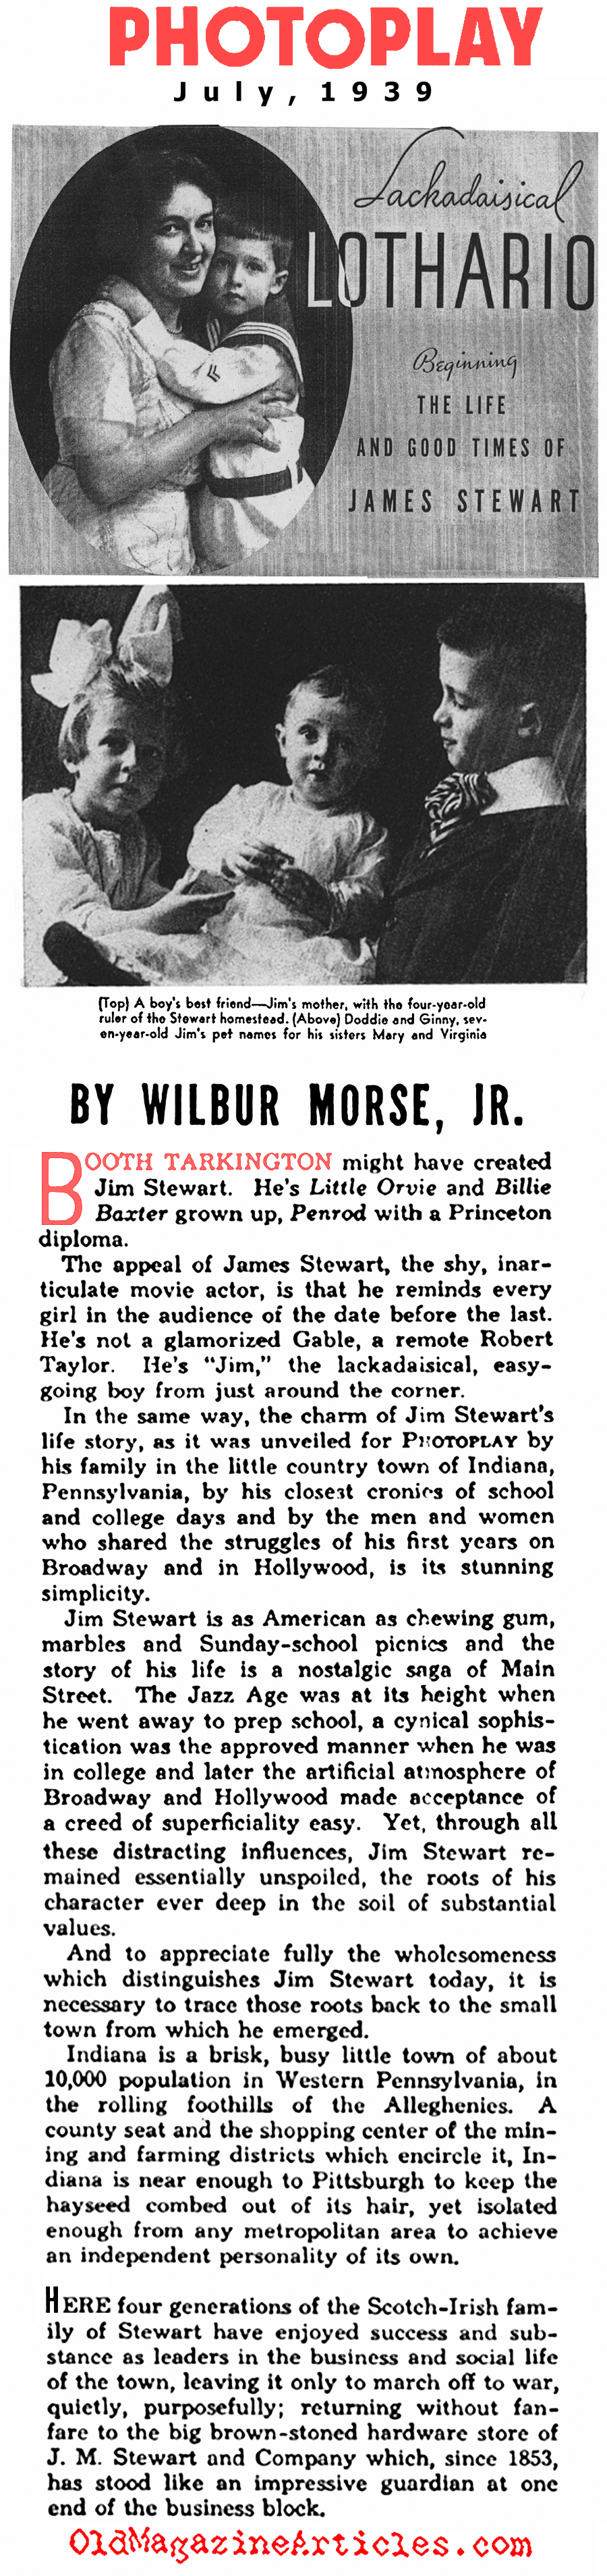 Jimmy Stewart as George Bailey (Photoplay Magazine, 1939)